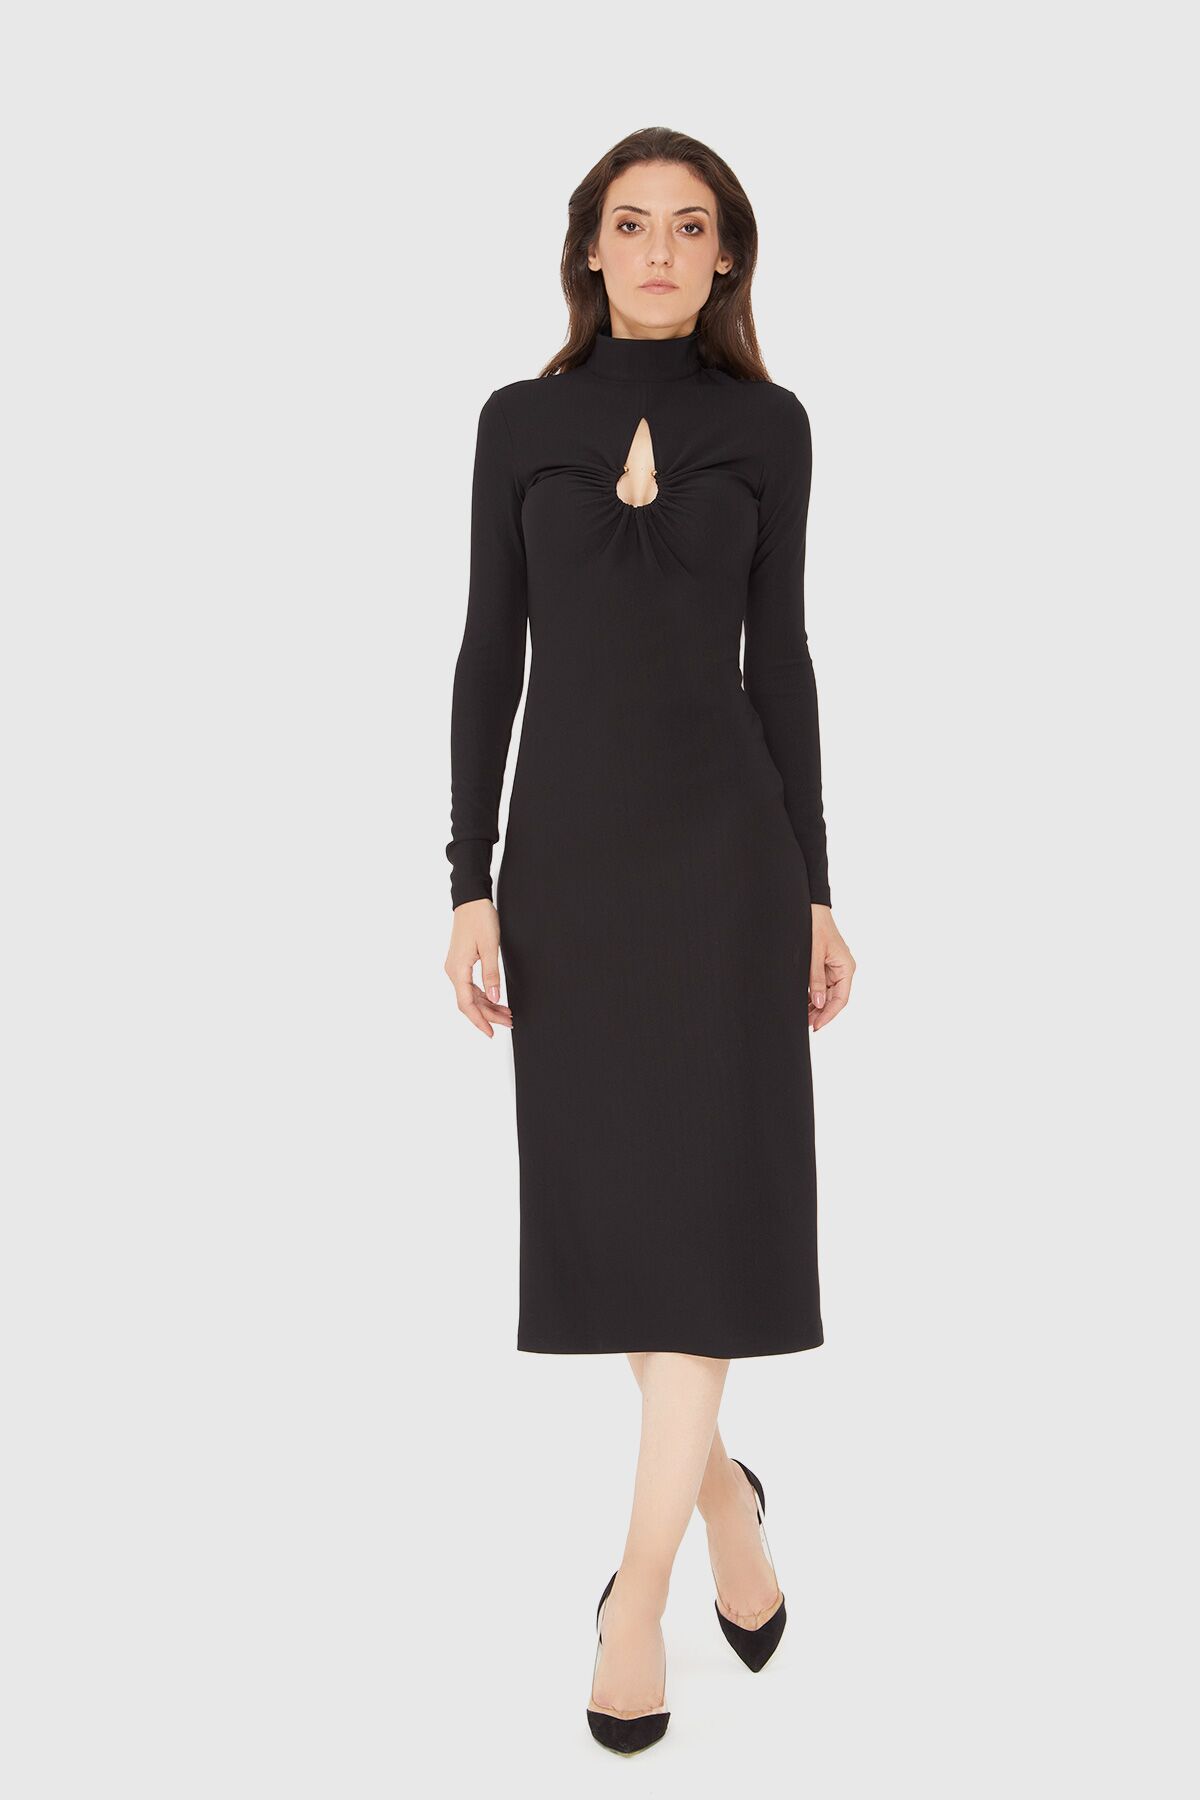 KIWE - Knitted Window Decollete Detailed Black Fit Dress